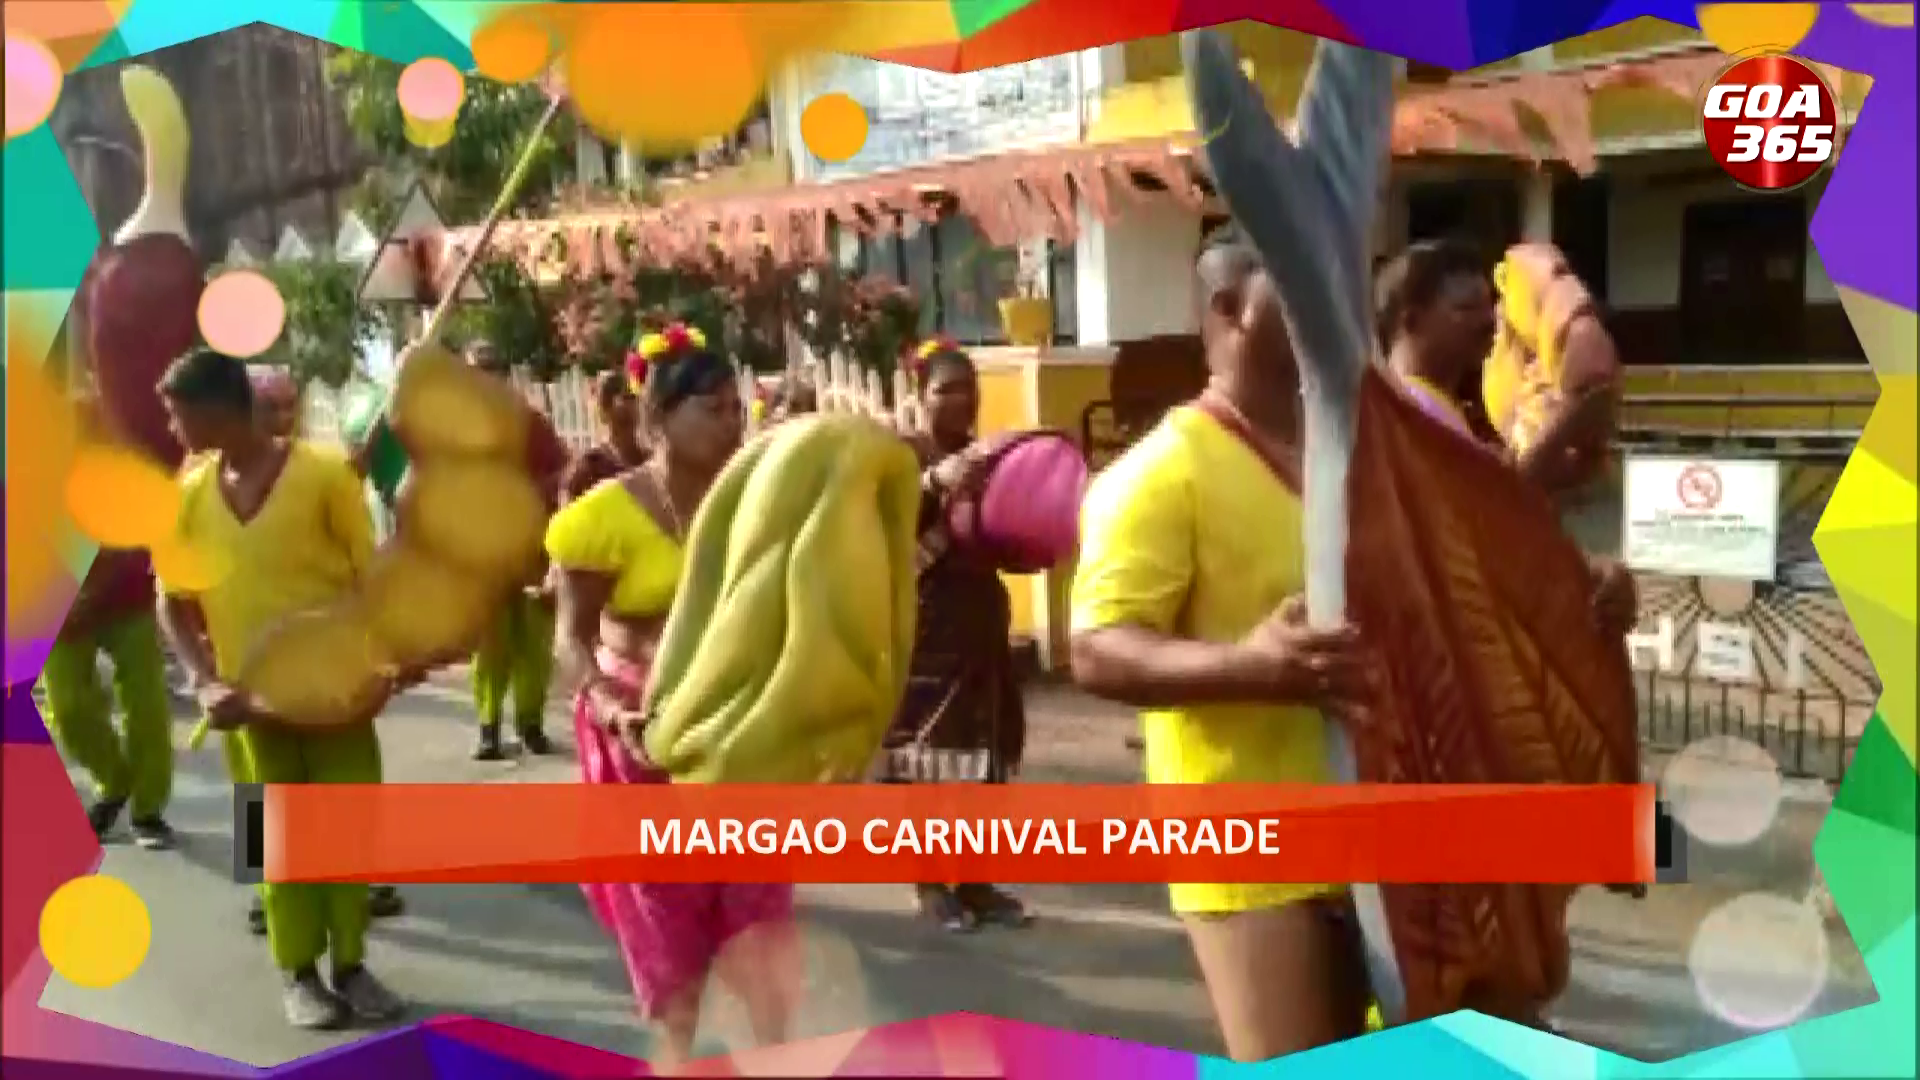 King Momo leads carnival parade to Margao: WATCH || ENGLISH || GOA365